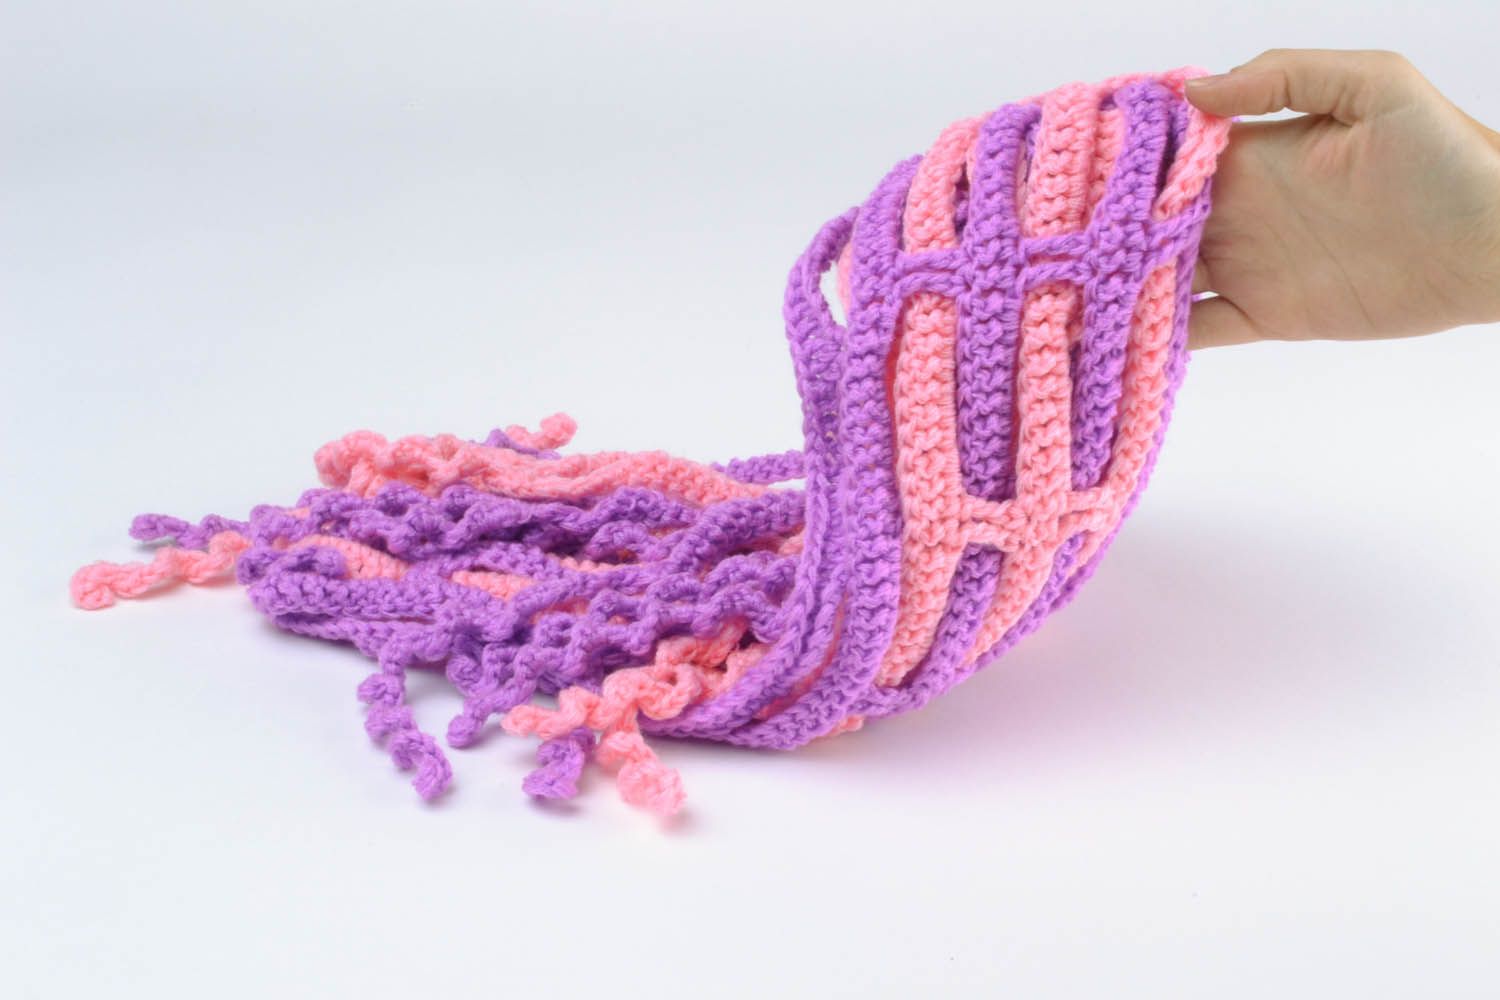 Violet crochet scarf photo 5